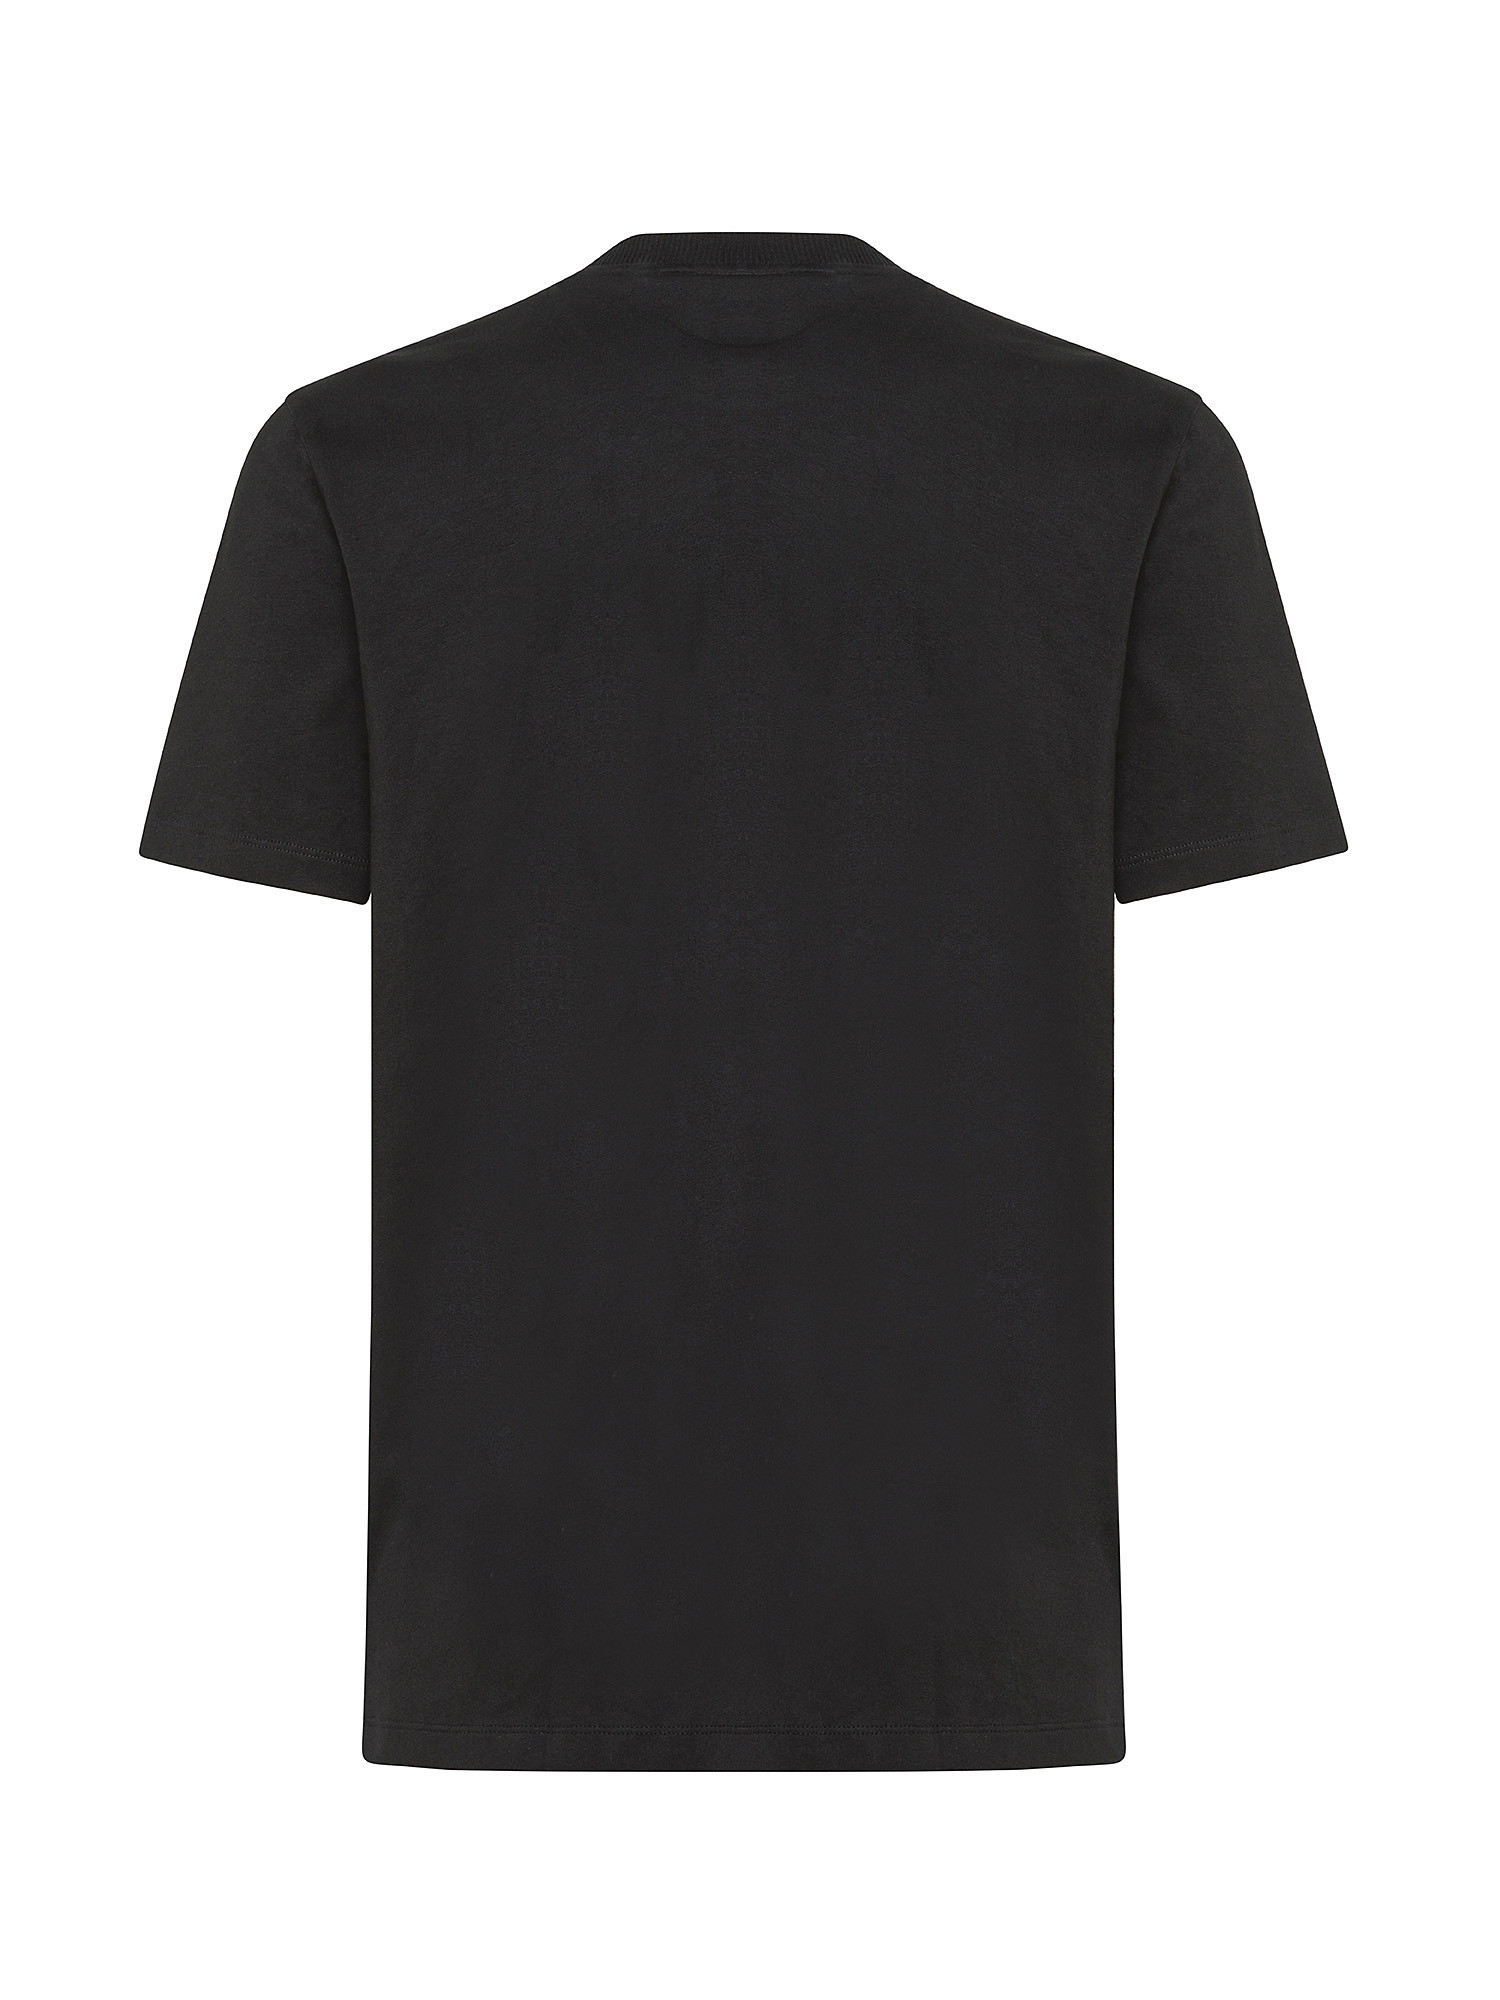 Hugo - T-shirt con logo ricamato in cotone, Nero, large image number 1